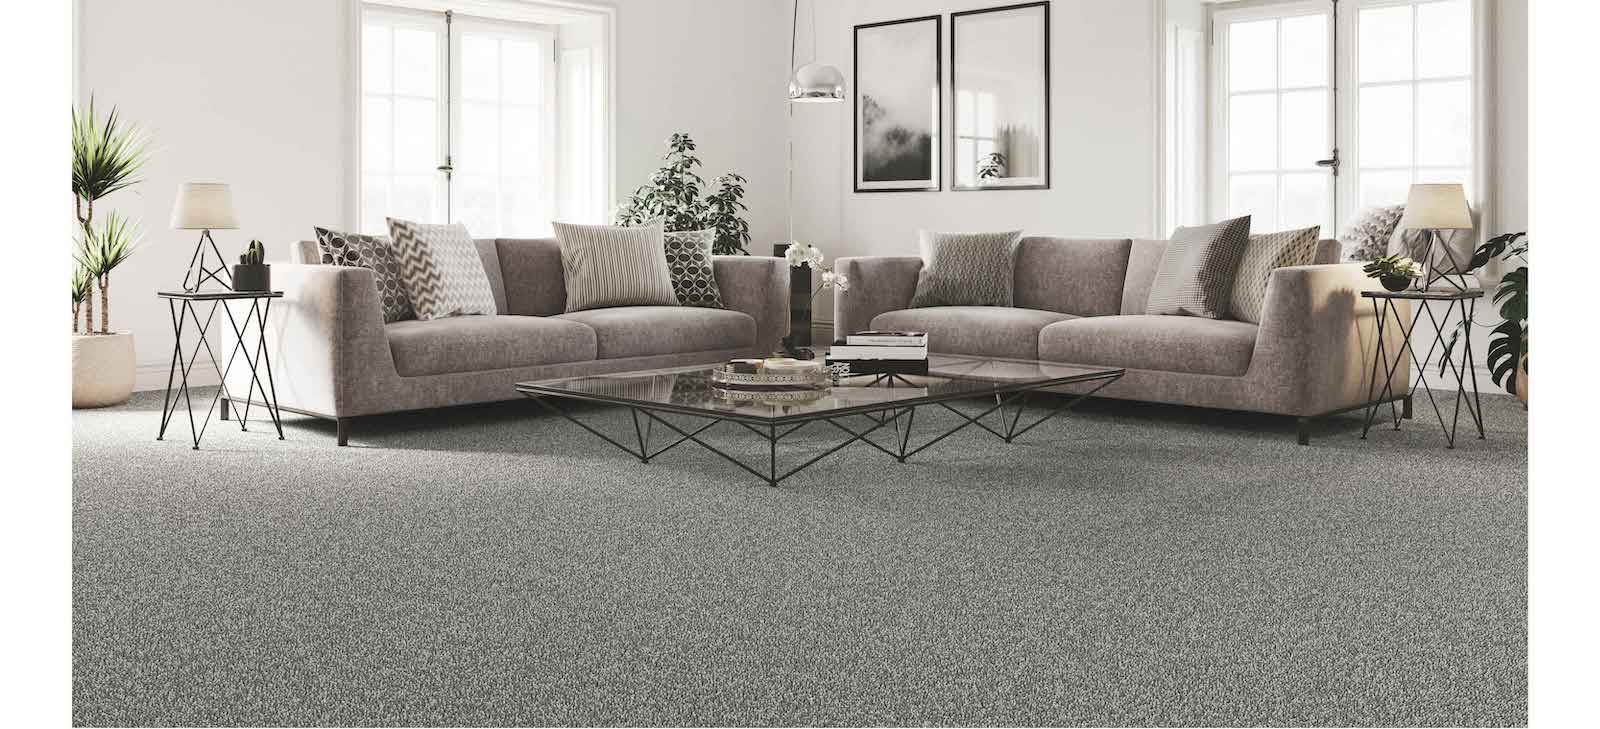 Spacious living room set with grey carpet